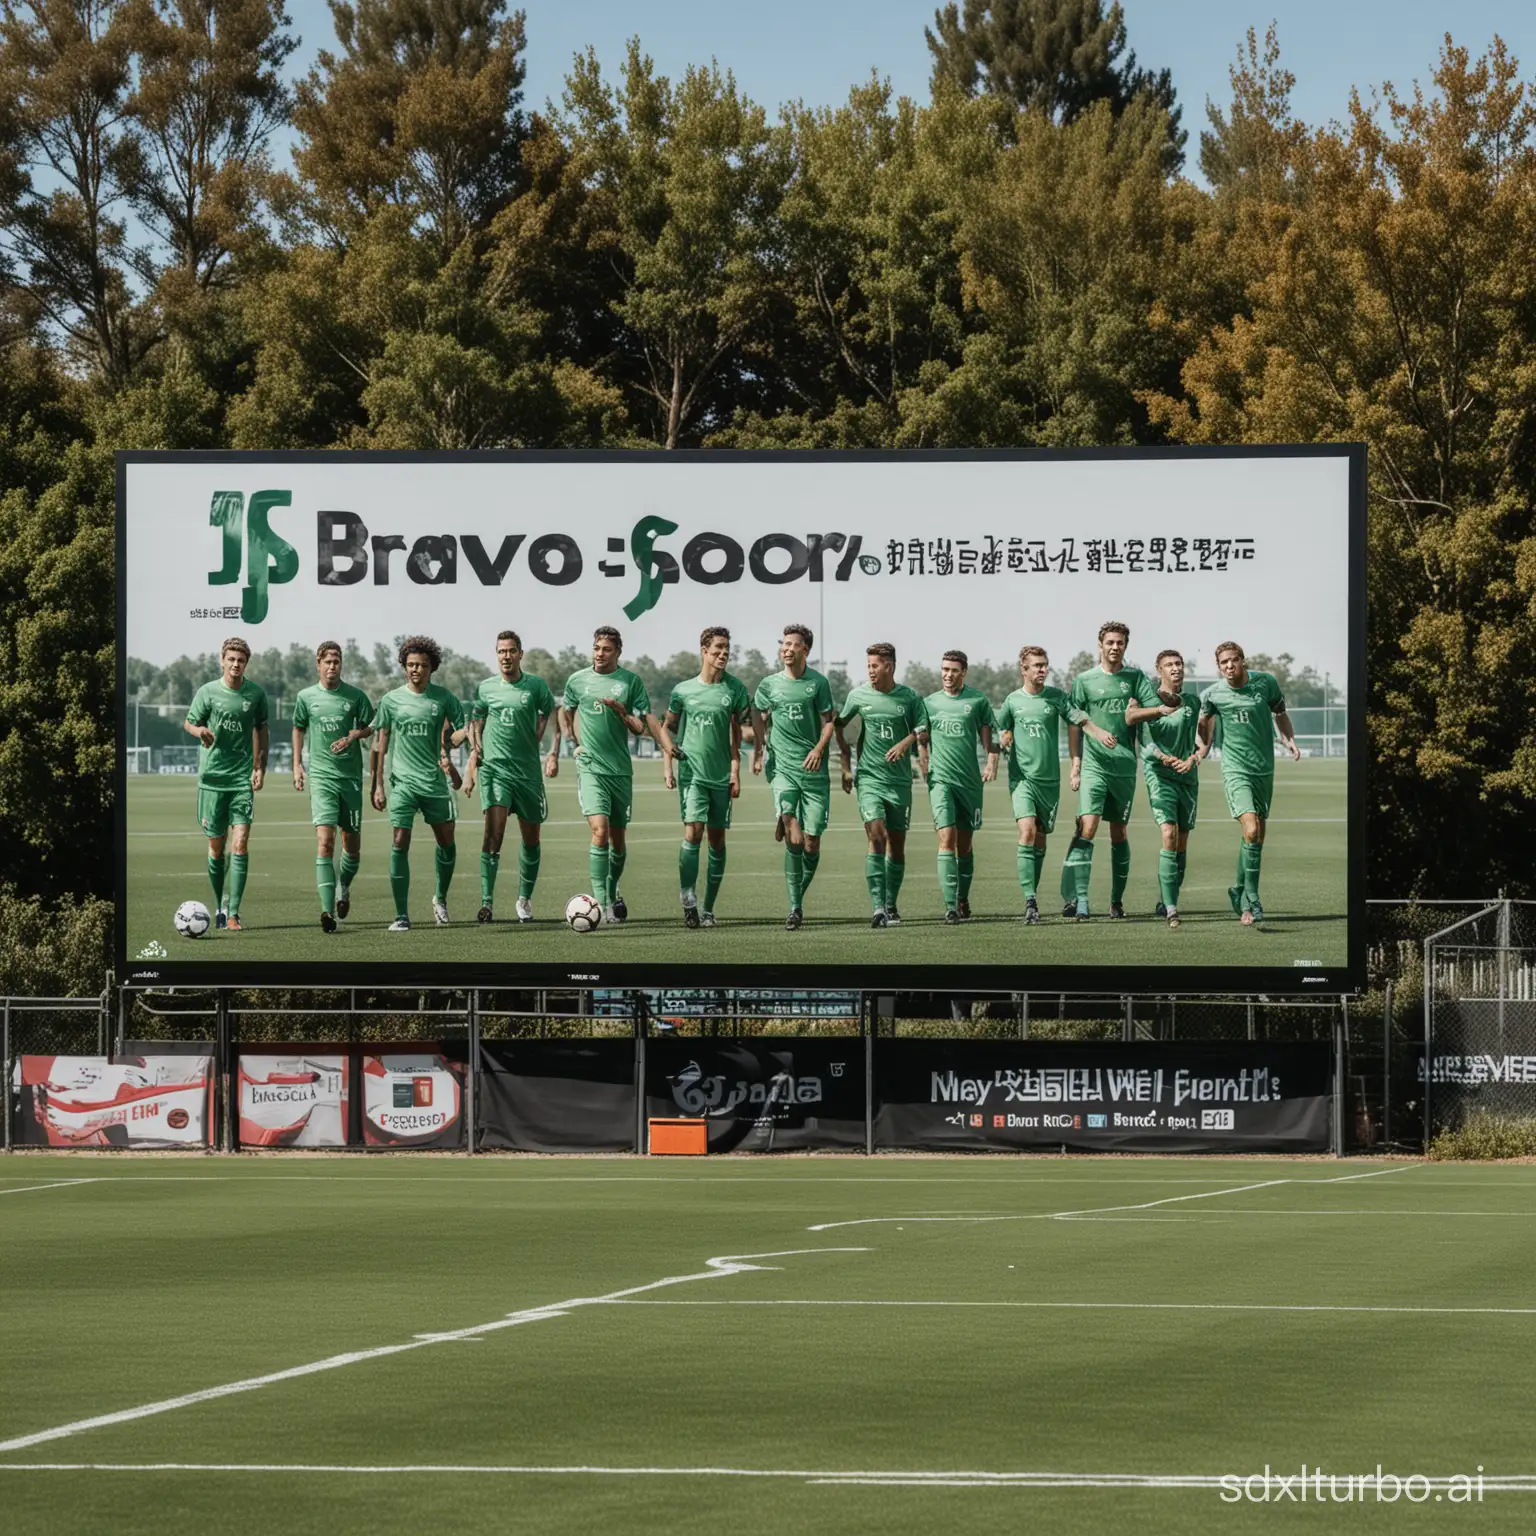 Soccer-Players-on-Field-with-JS-BRAVO-SPORT-Billboard